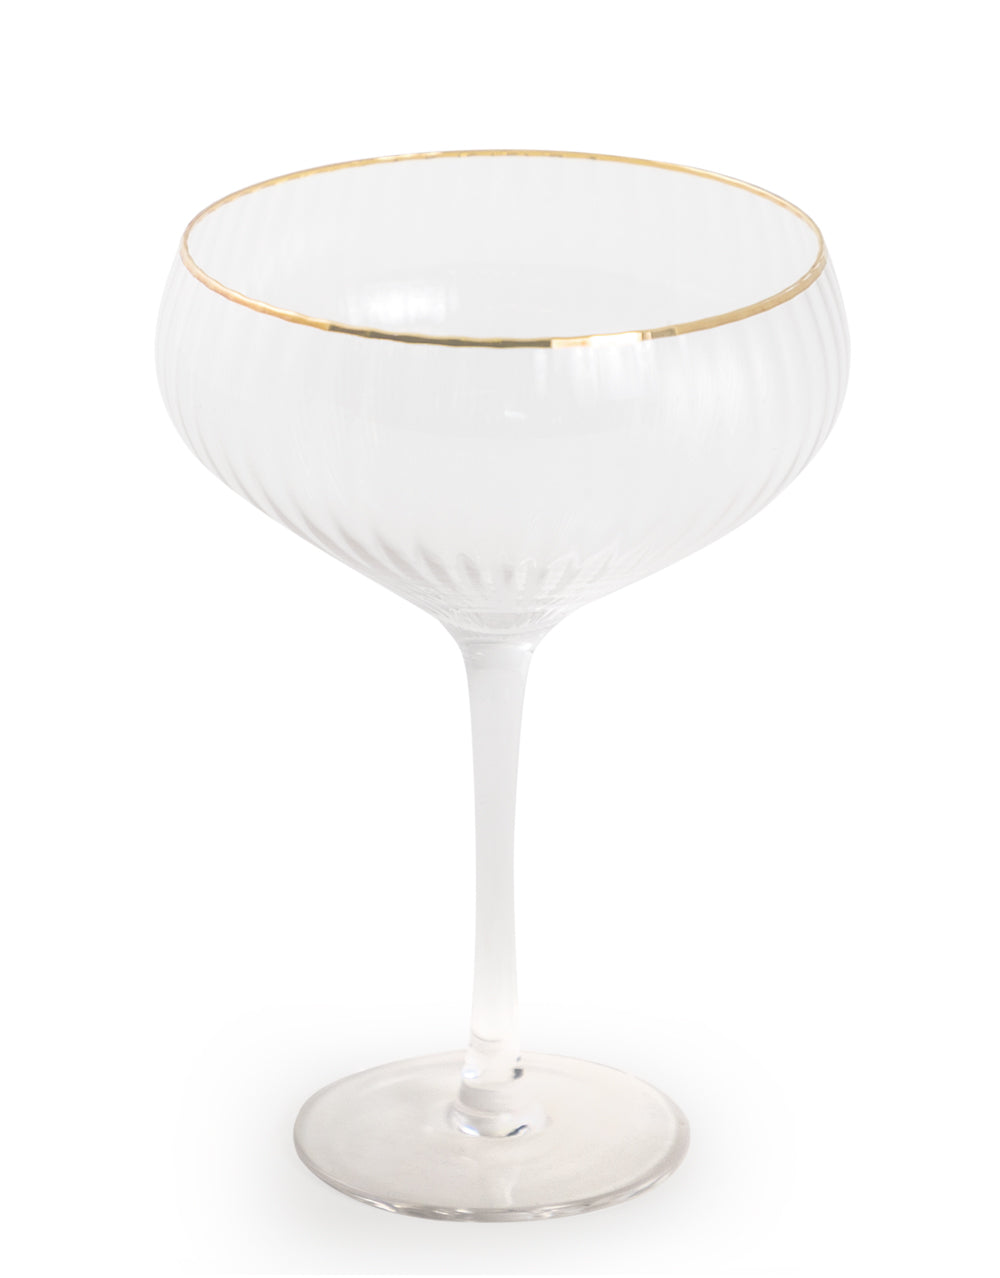 Ribbed Gold Rim Champagne Glasses, Set of 4